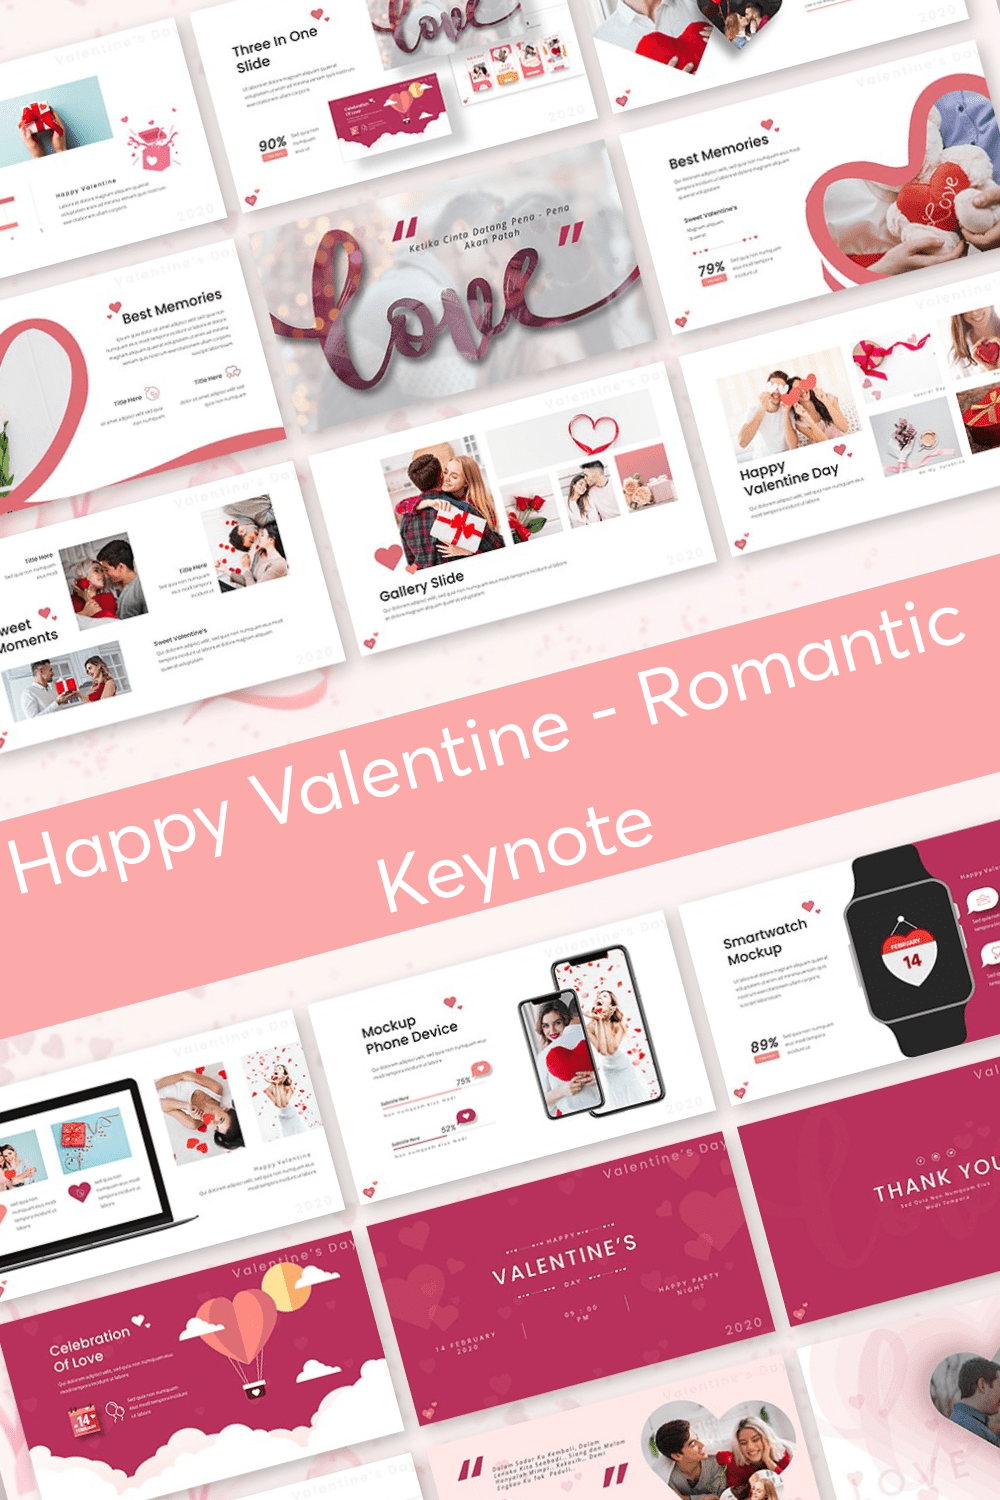 Happy Valentine - Romantic Keynote Example.